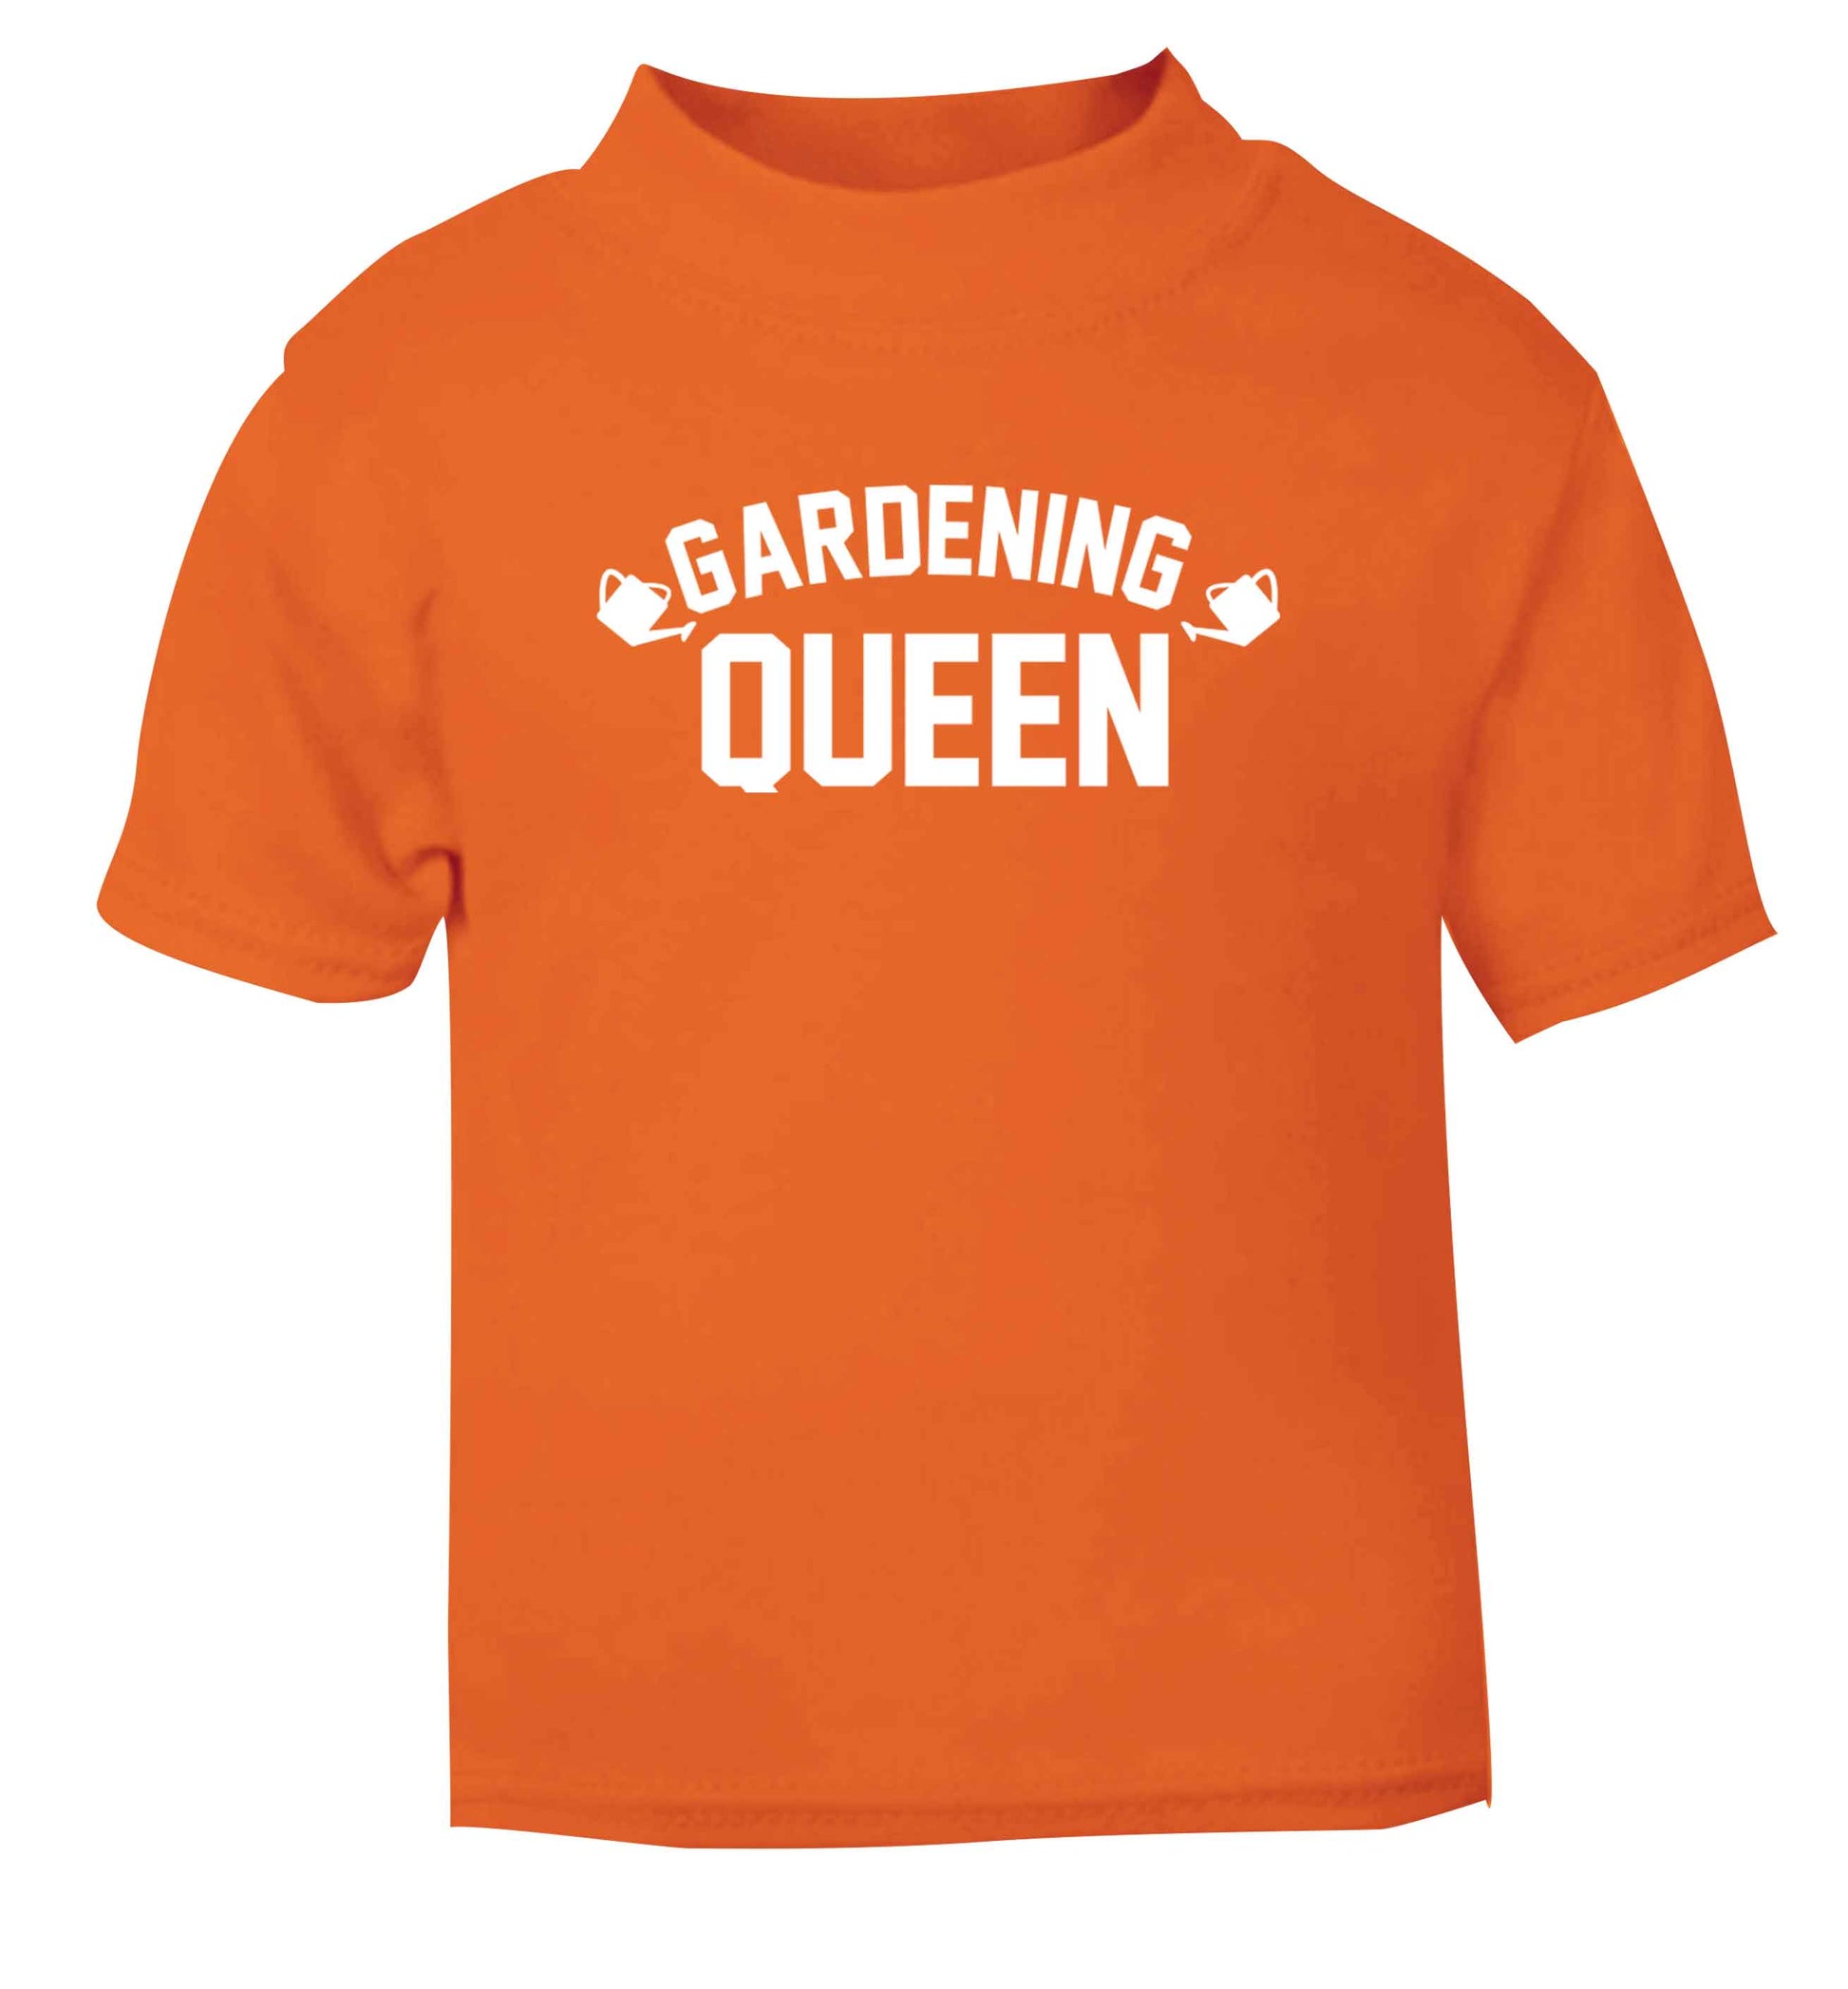 Gardening queen orange Baby Toddler Tshirt 2 Years